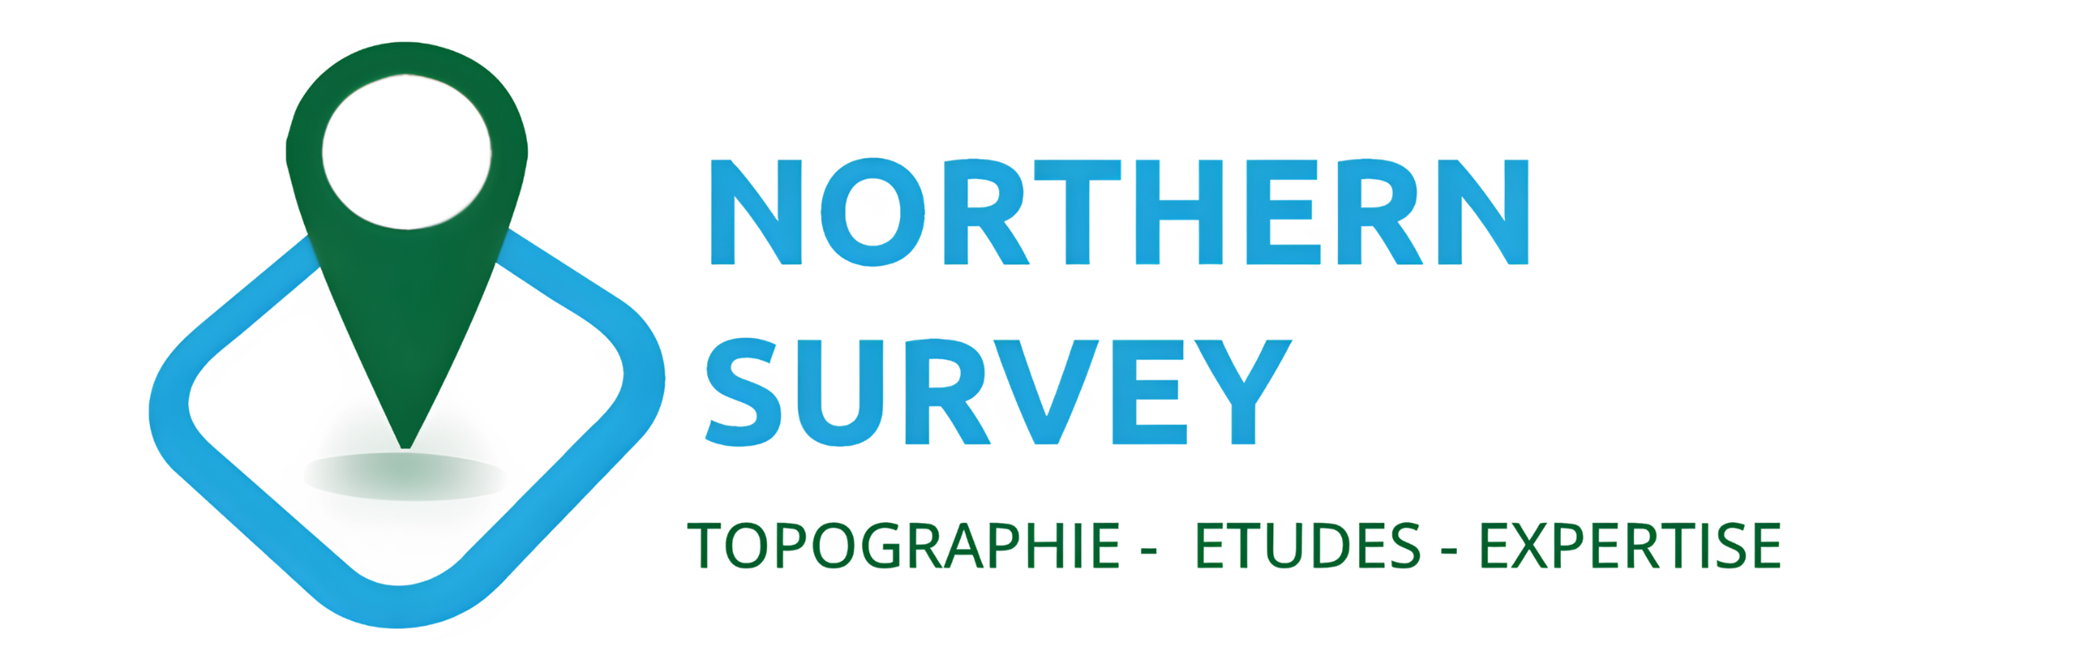 Northern survey logo